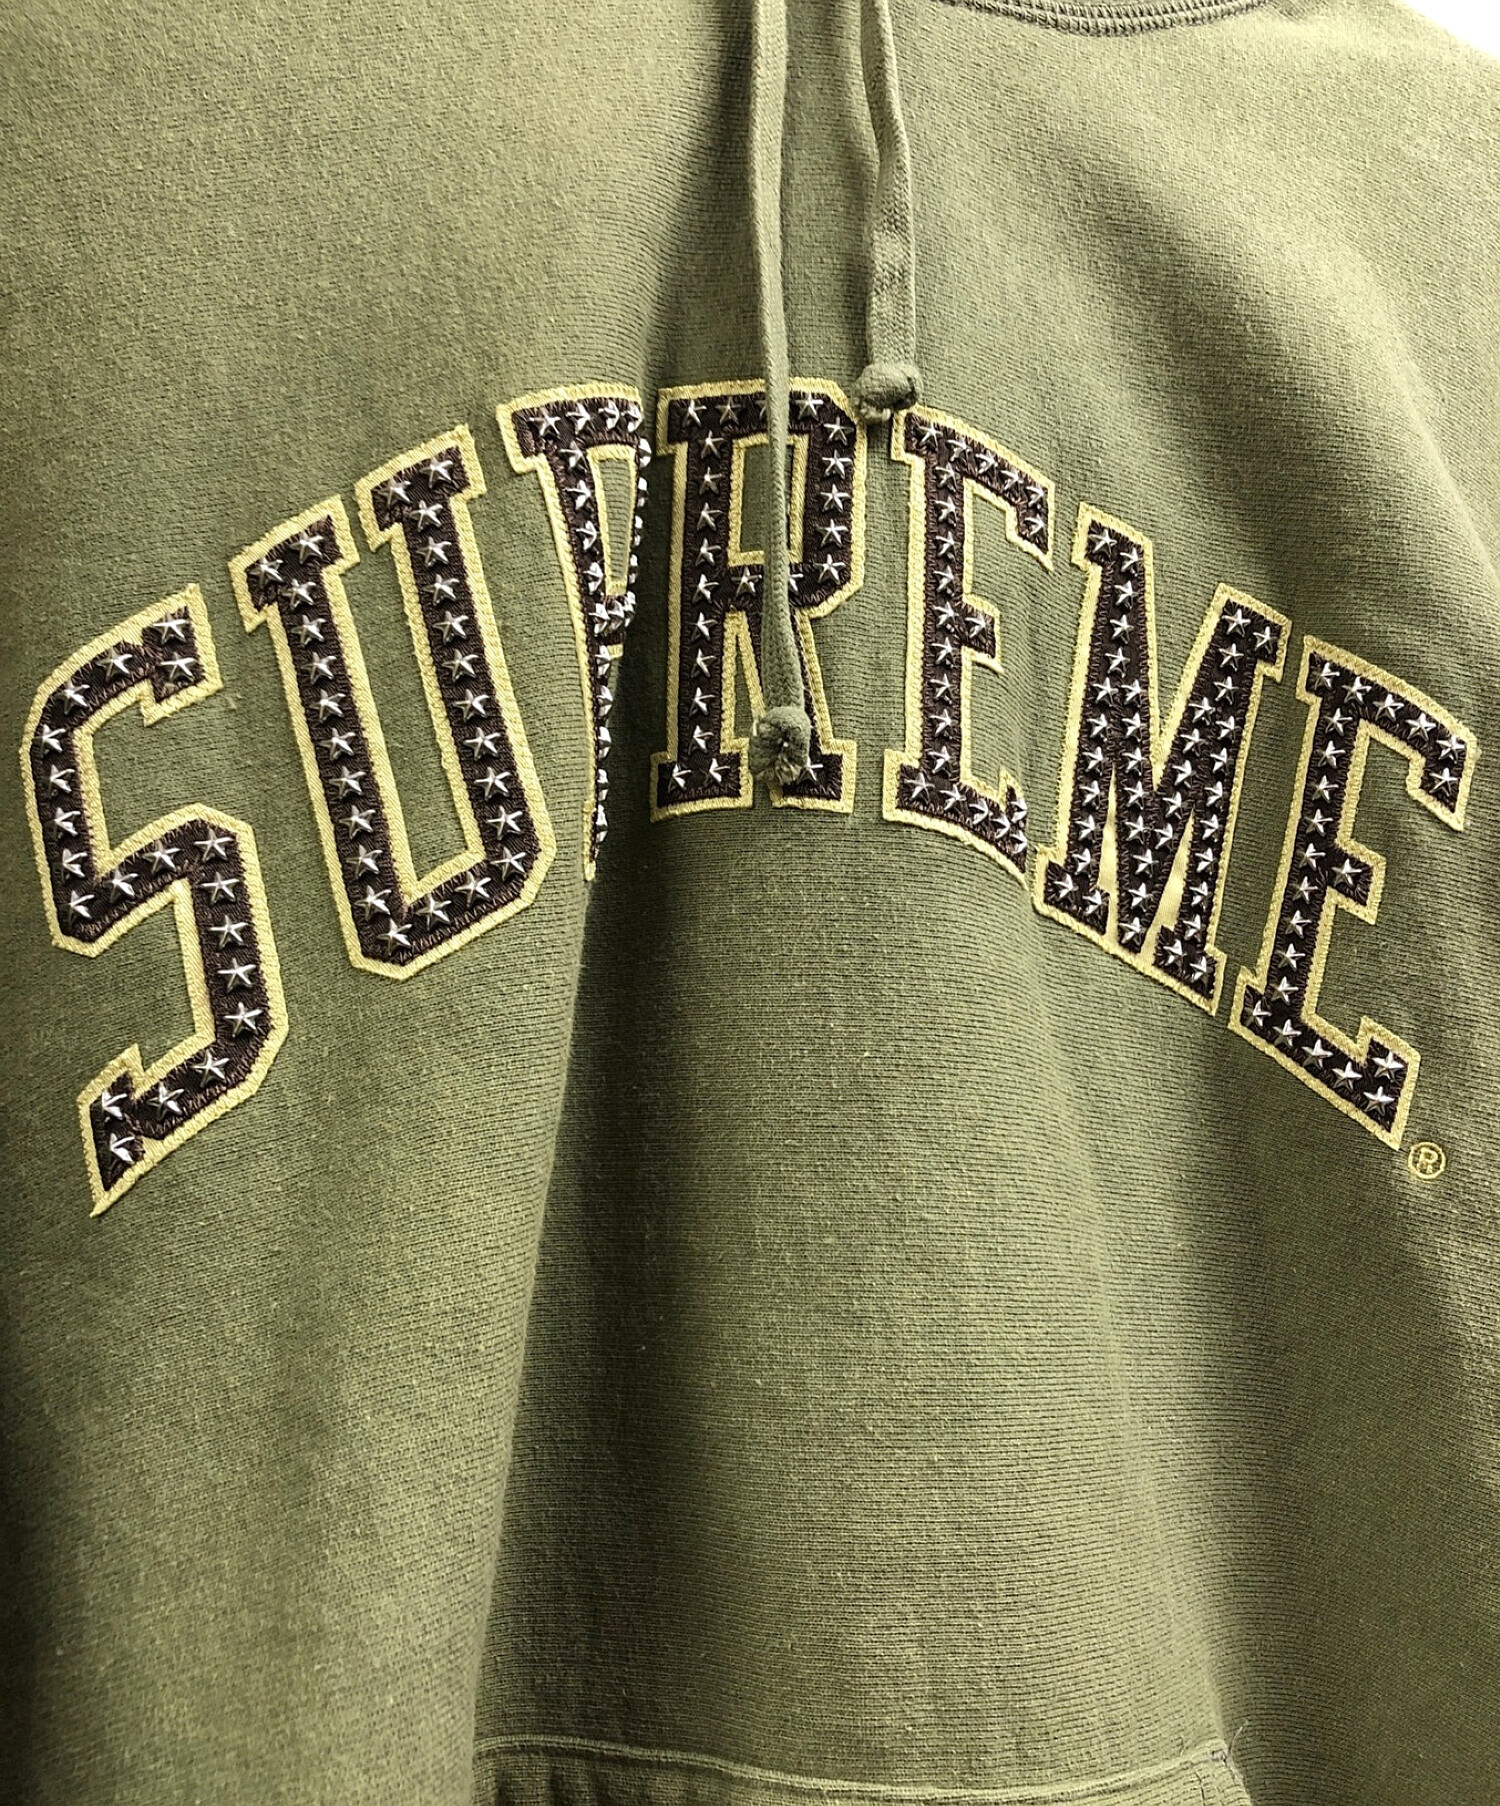 supreme 22SS Stars Arc Hooded Sweatshirt